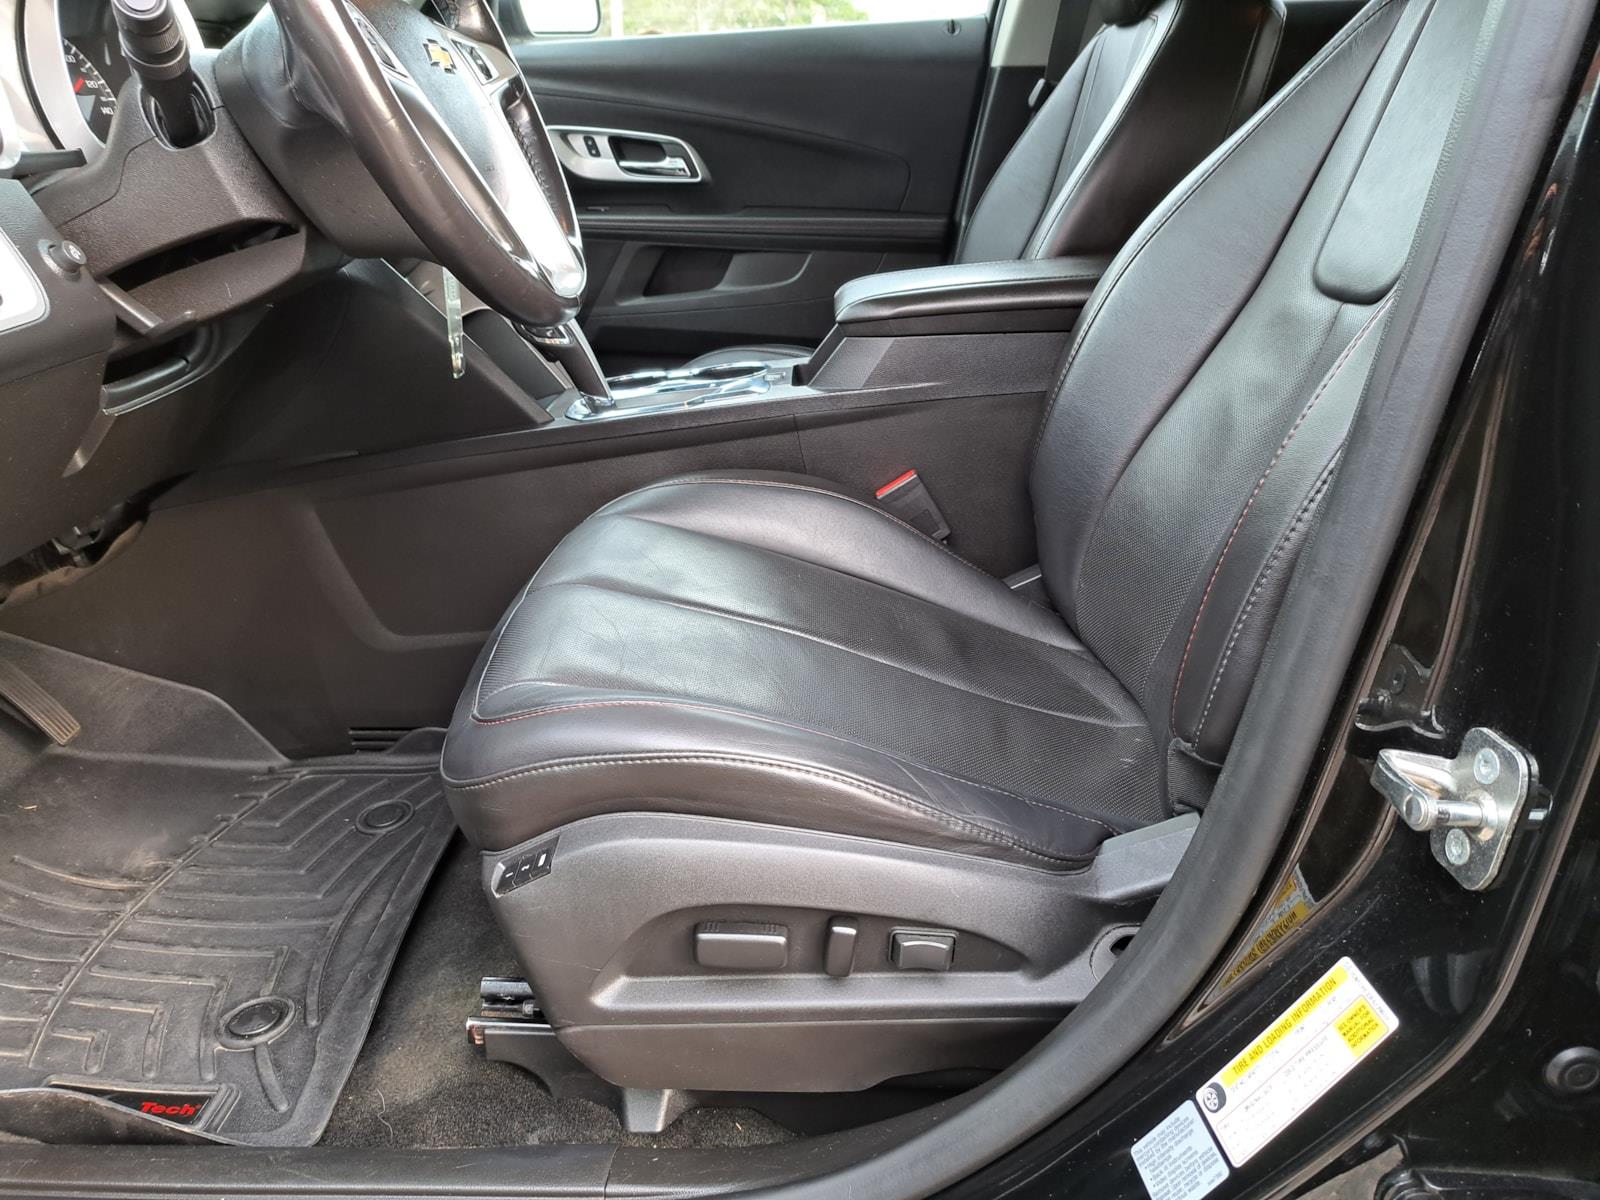 2015 Chevrolet Equinox LTZ SUV All Wheel Drive thumbnail 51